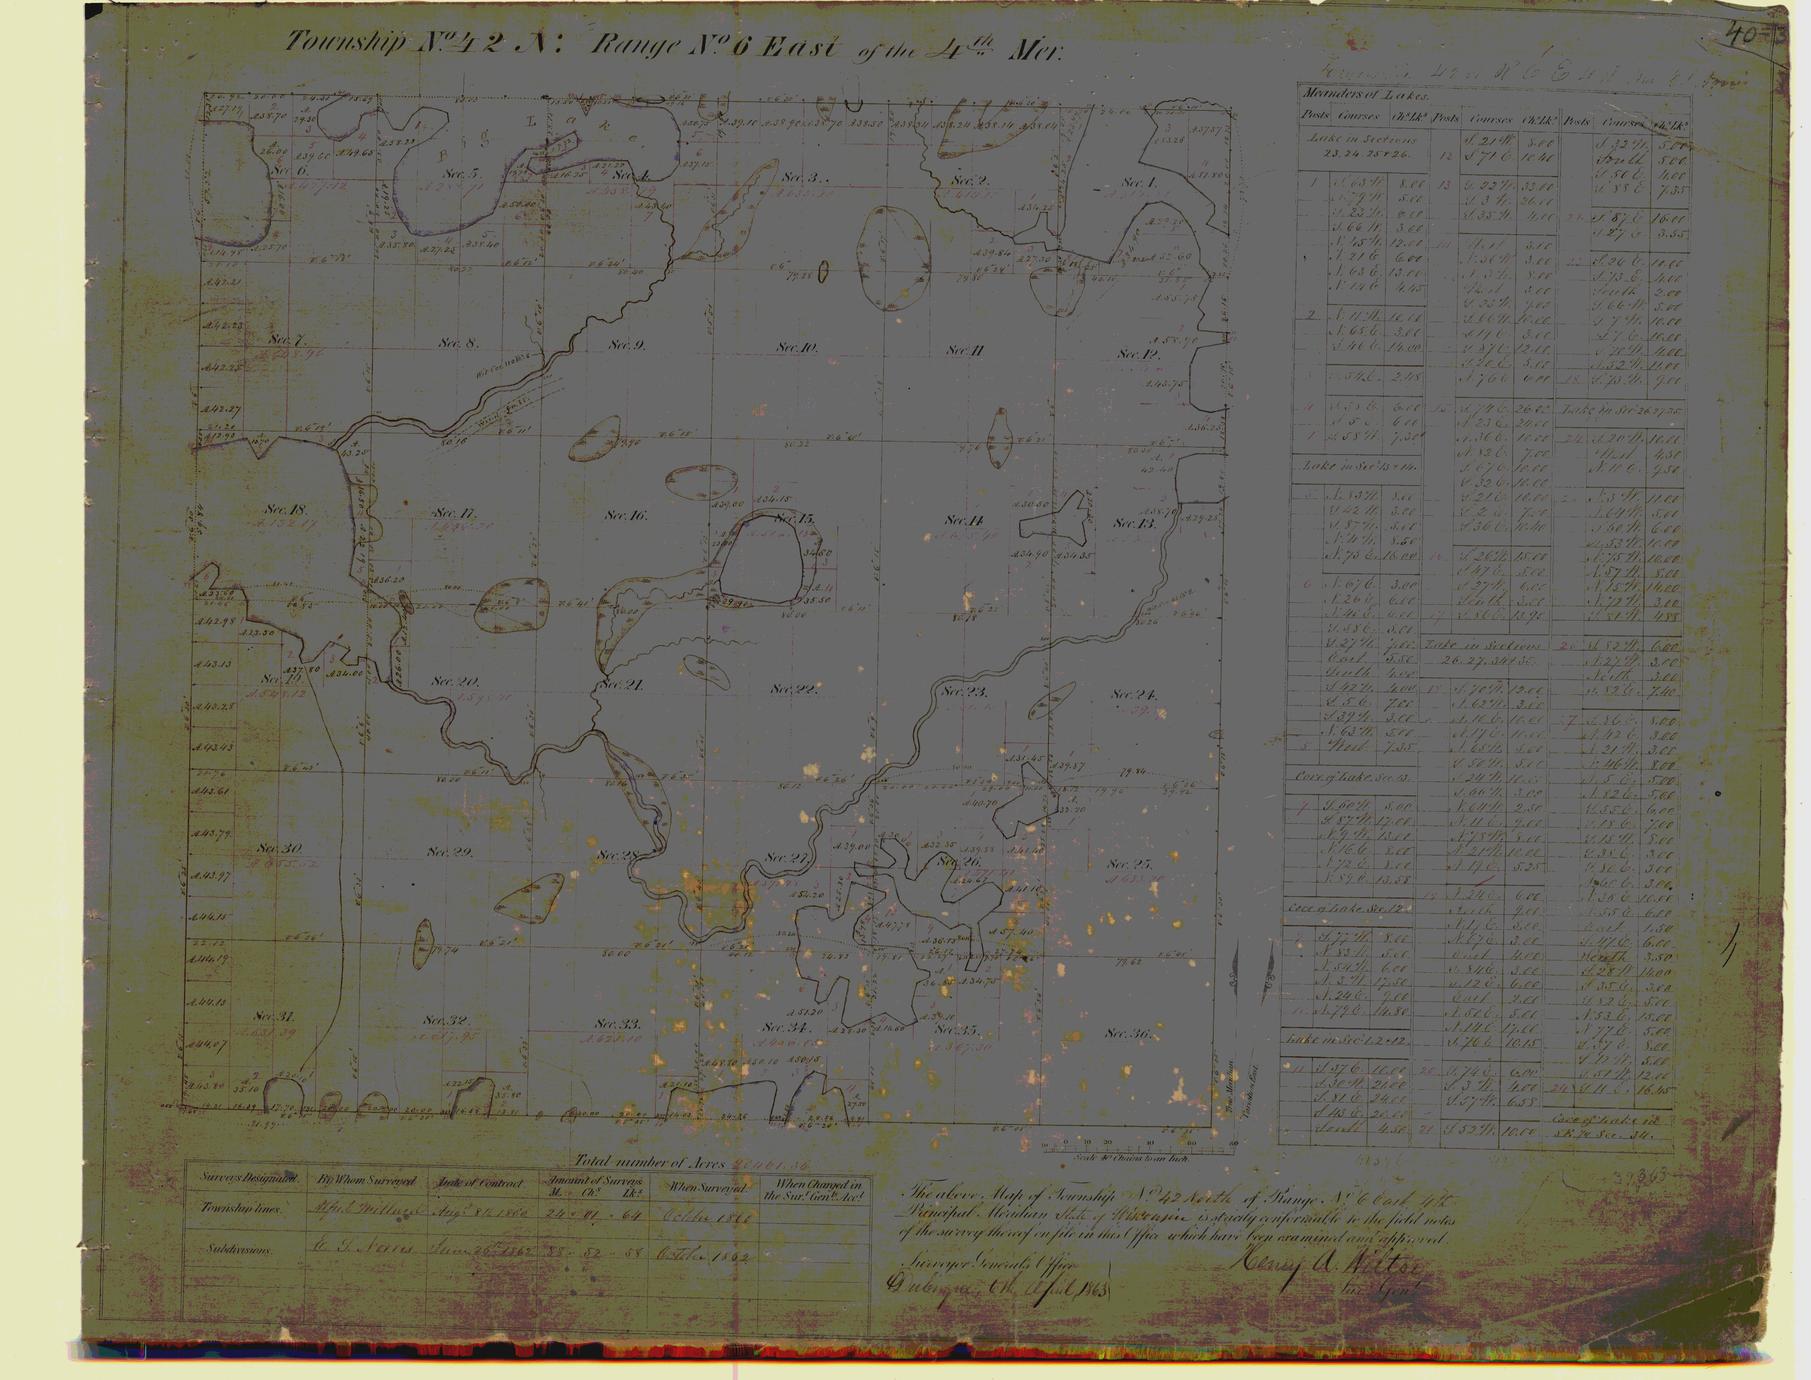 [Public Land Survey System map: Wisconsin Township 42 North, Range 06 East]